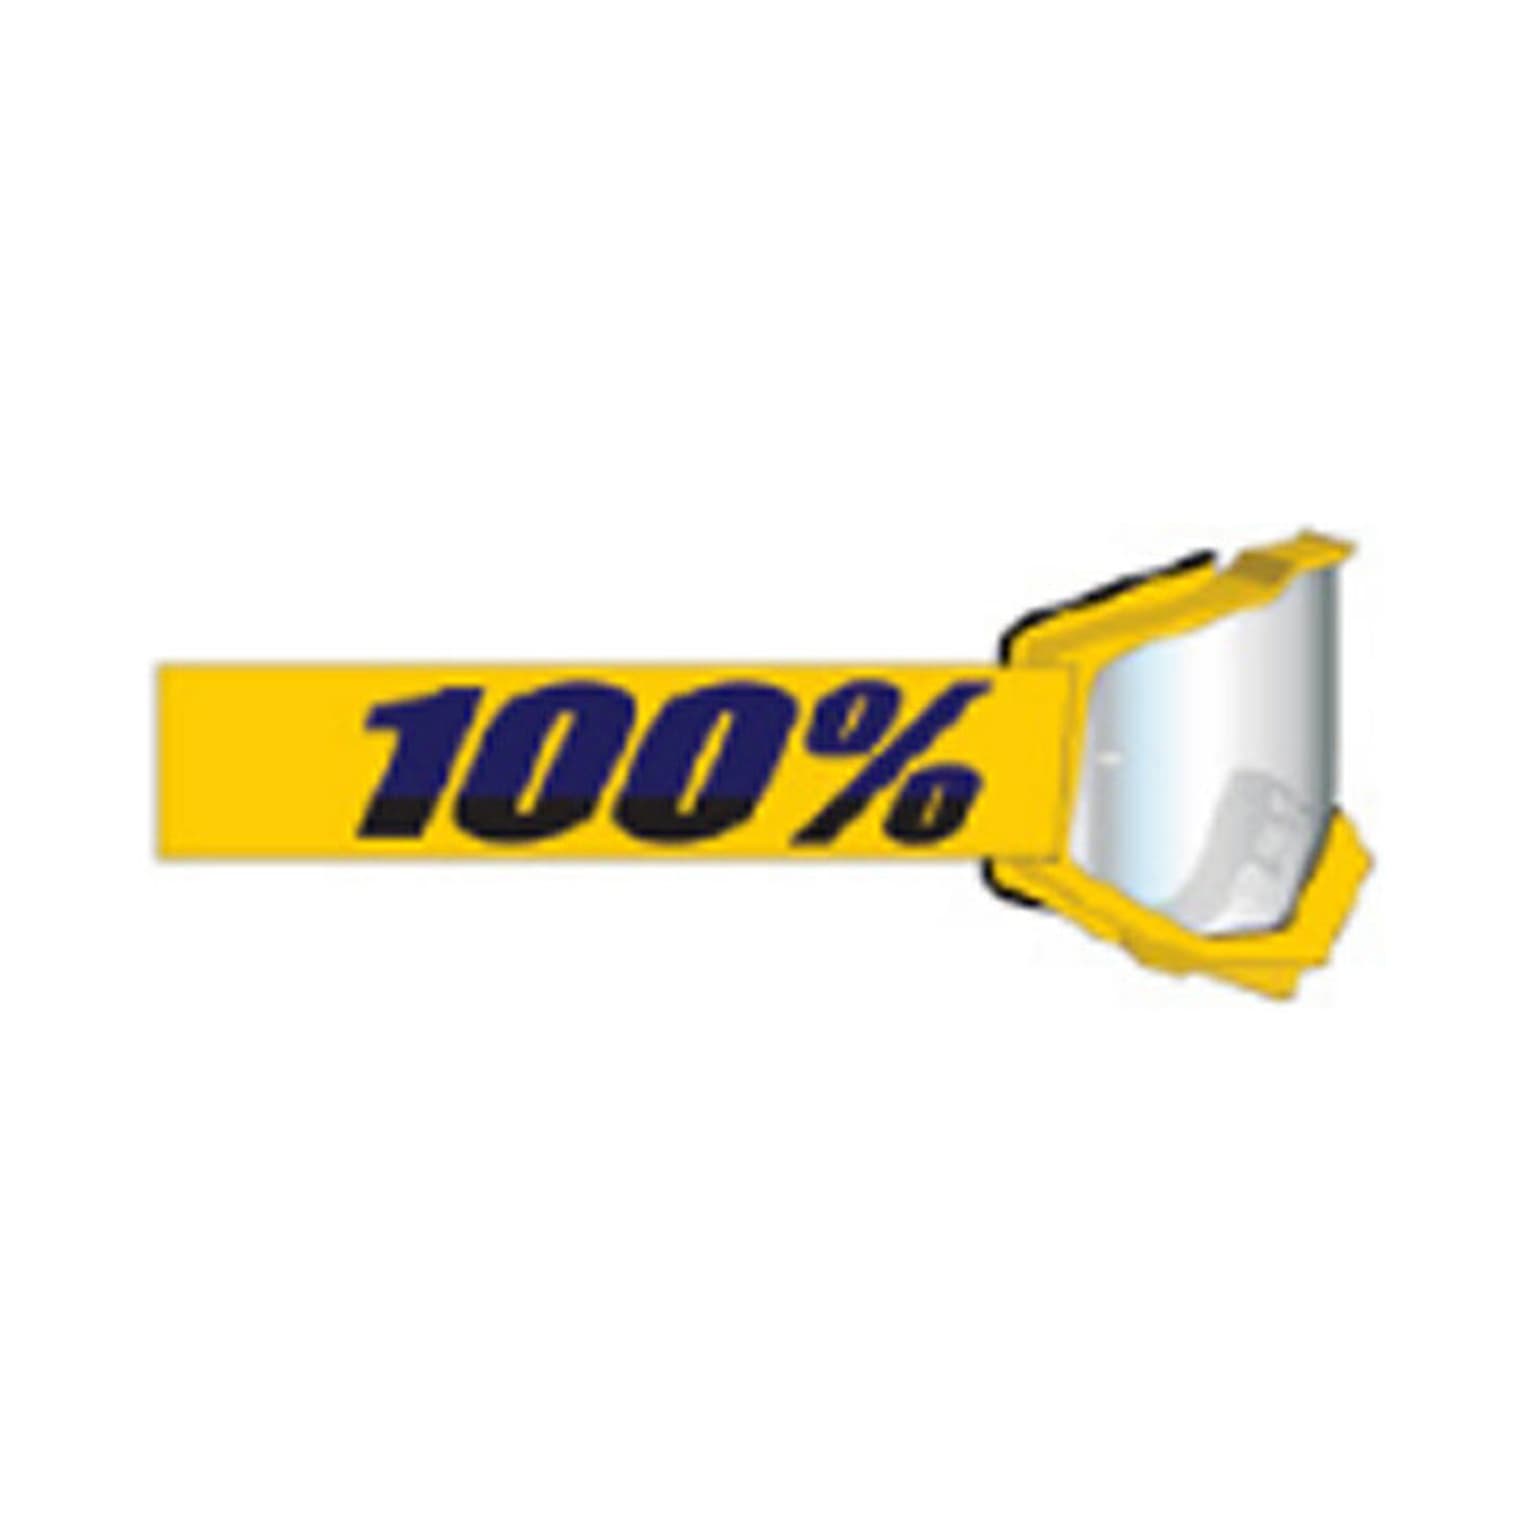 100% 100% Accuri 2 Lunettes VTT jaune-fonce 1